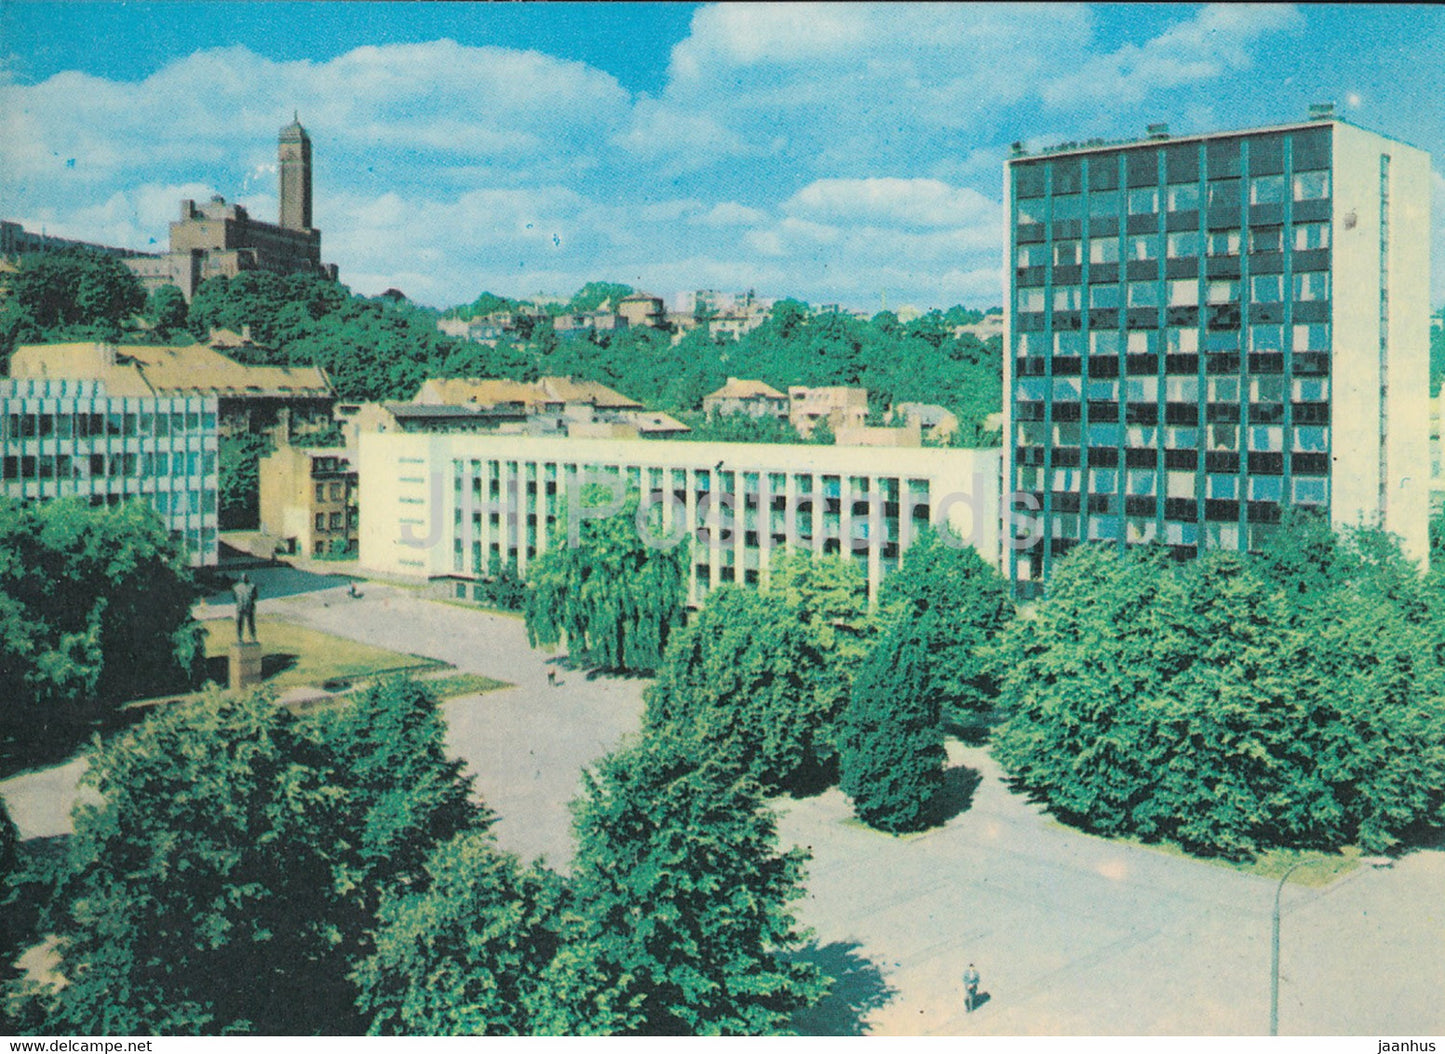 Kaunas - J. Janonis Square - 1982 - Lithuania USSR - unused - JH Postcards